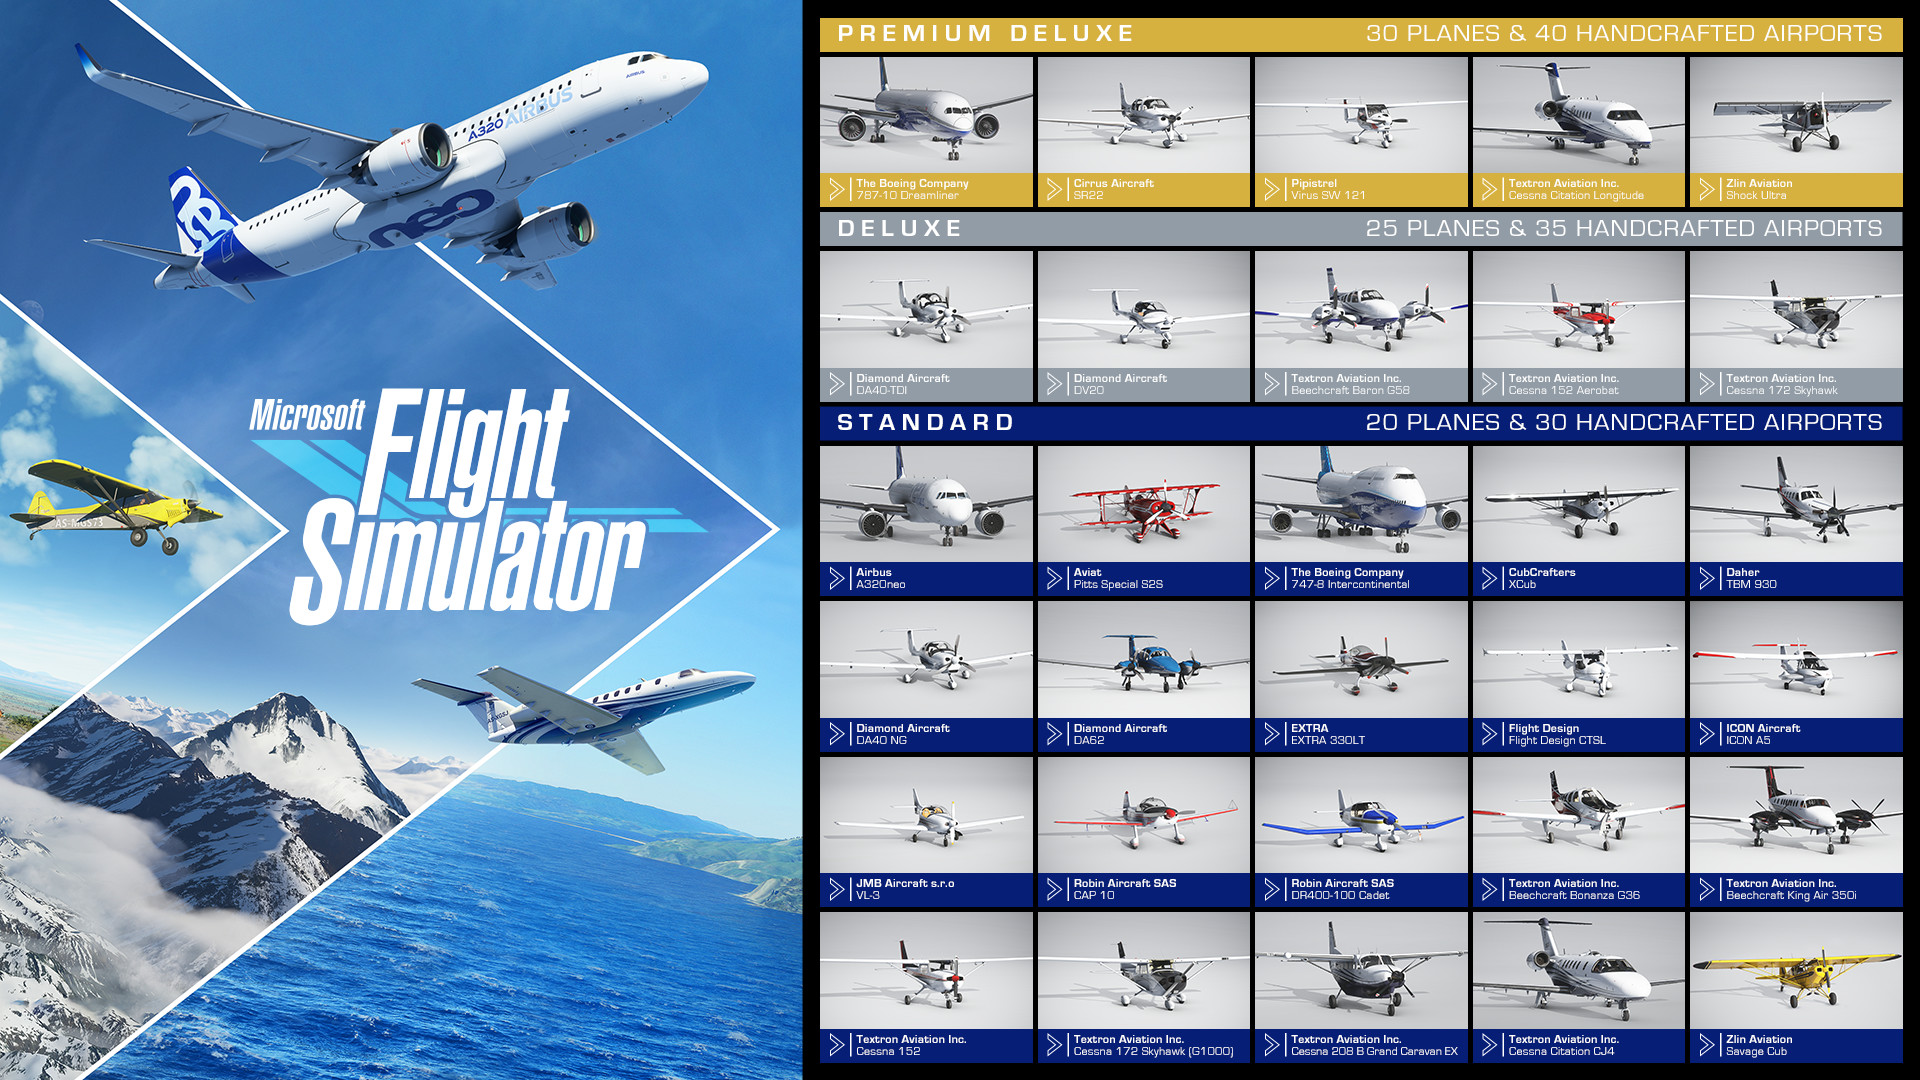 Microsoft Flight Simulator Premium Deluxe Game of the Year Edition EU Xbox Series X|S / Windows 10 CD Key 102.81$